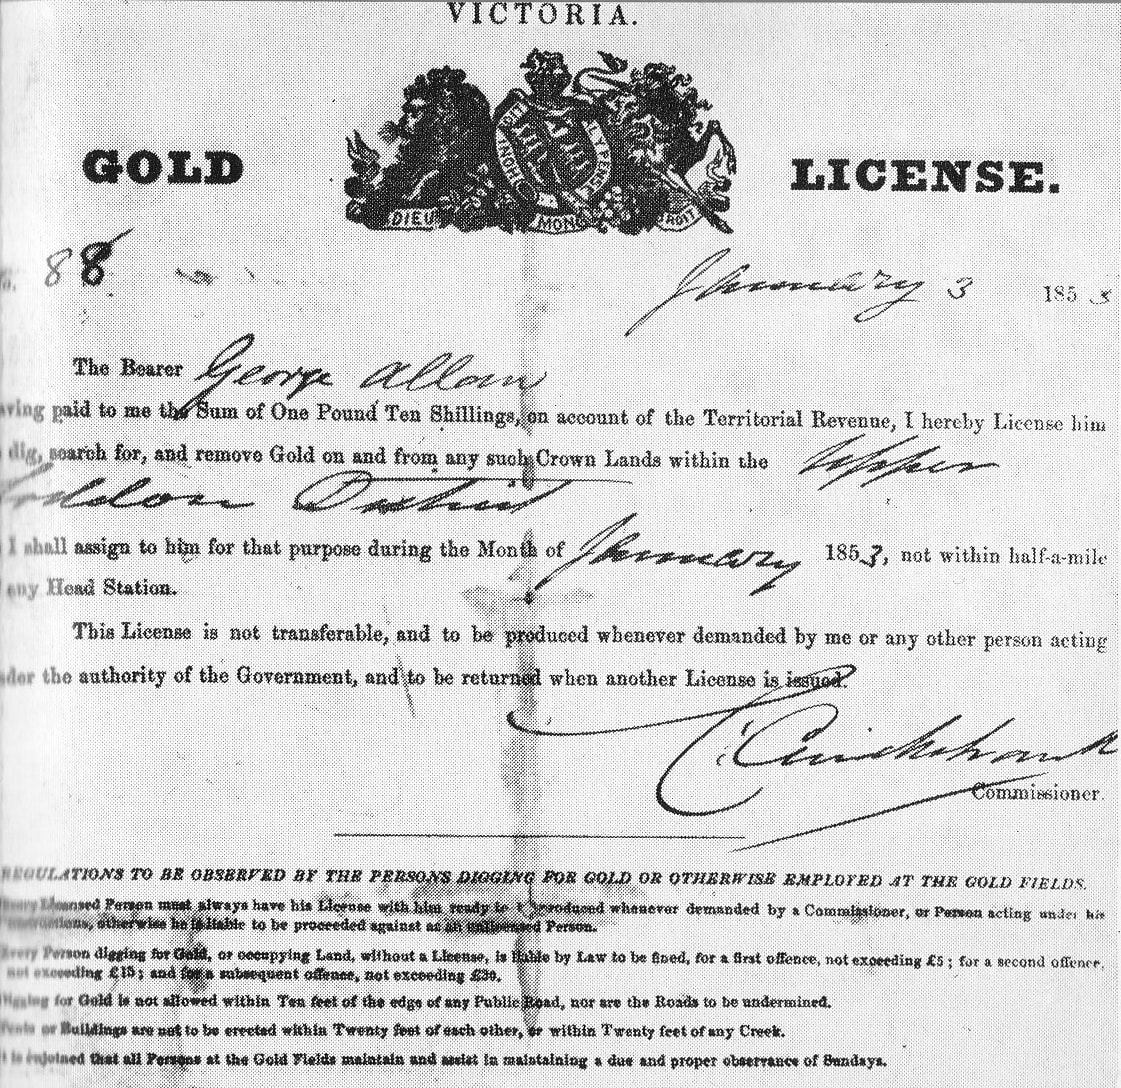 George Allan, gold license, Victoria, 3 January 1853